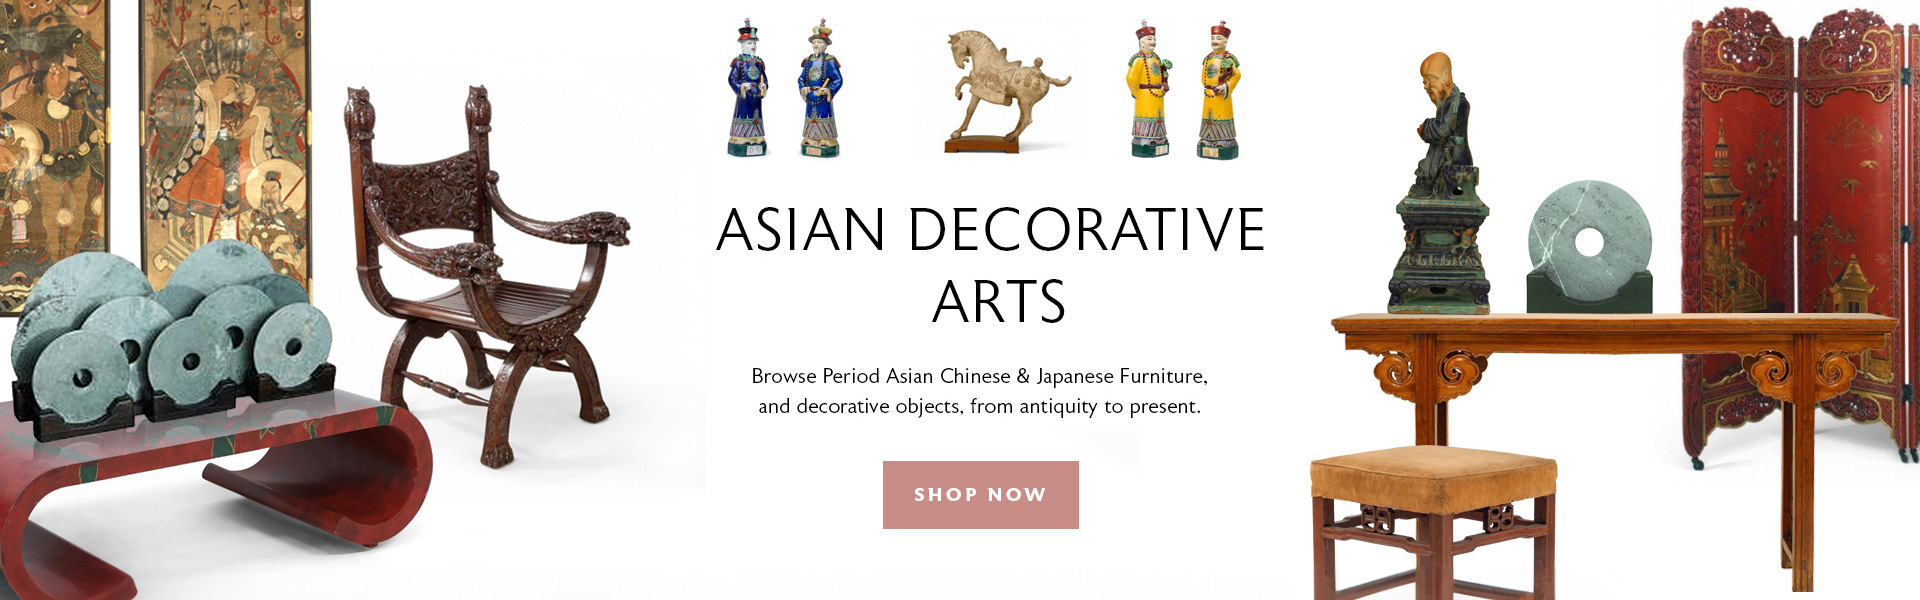 Asian Decorative Arts